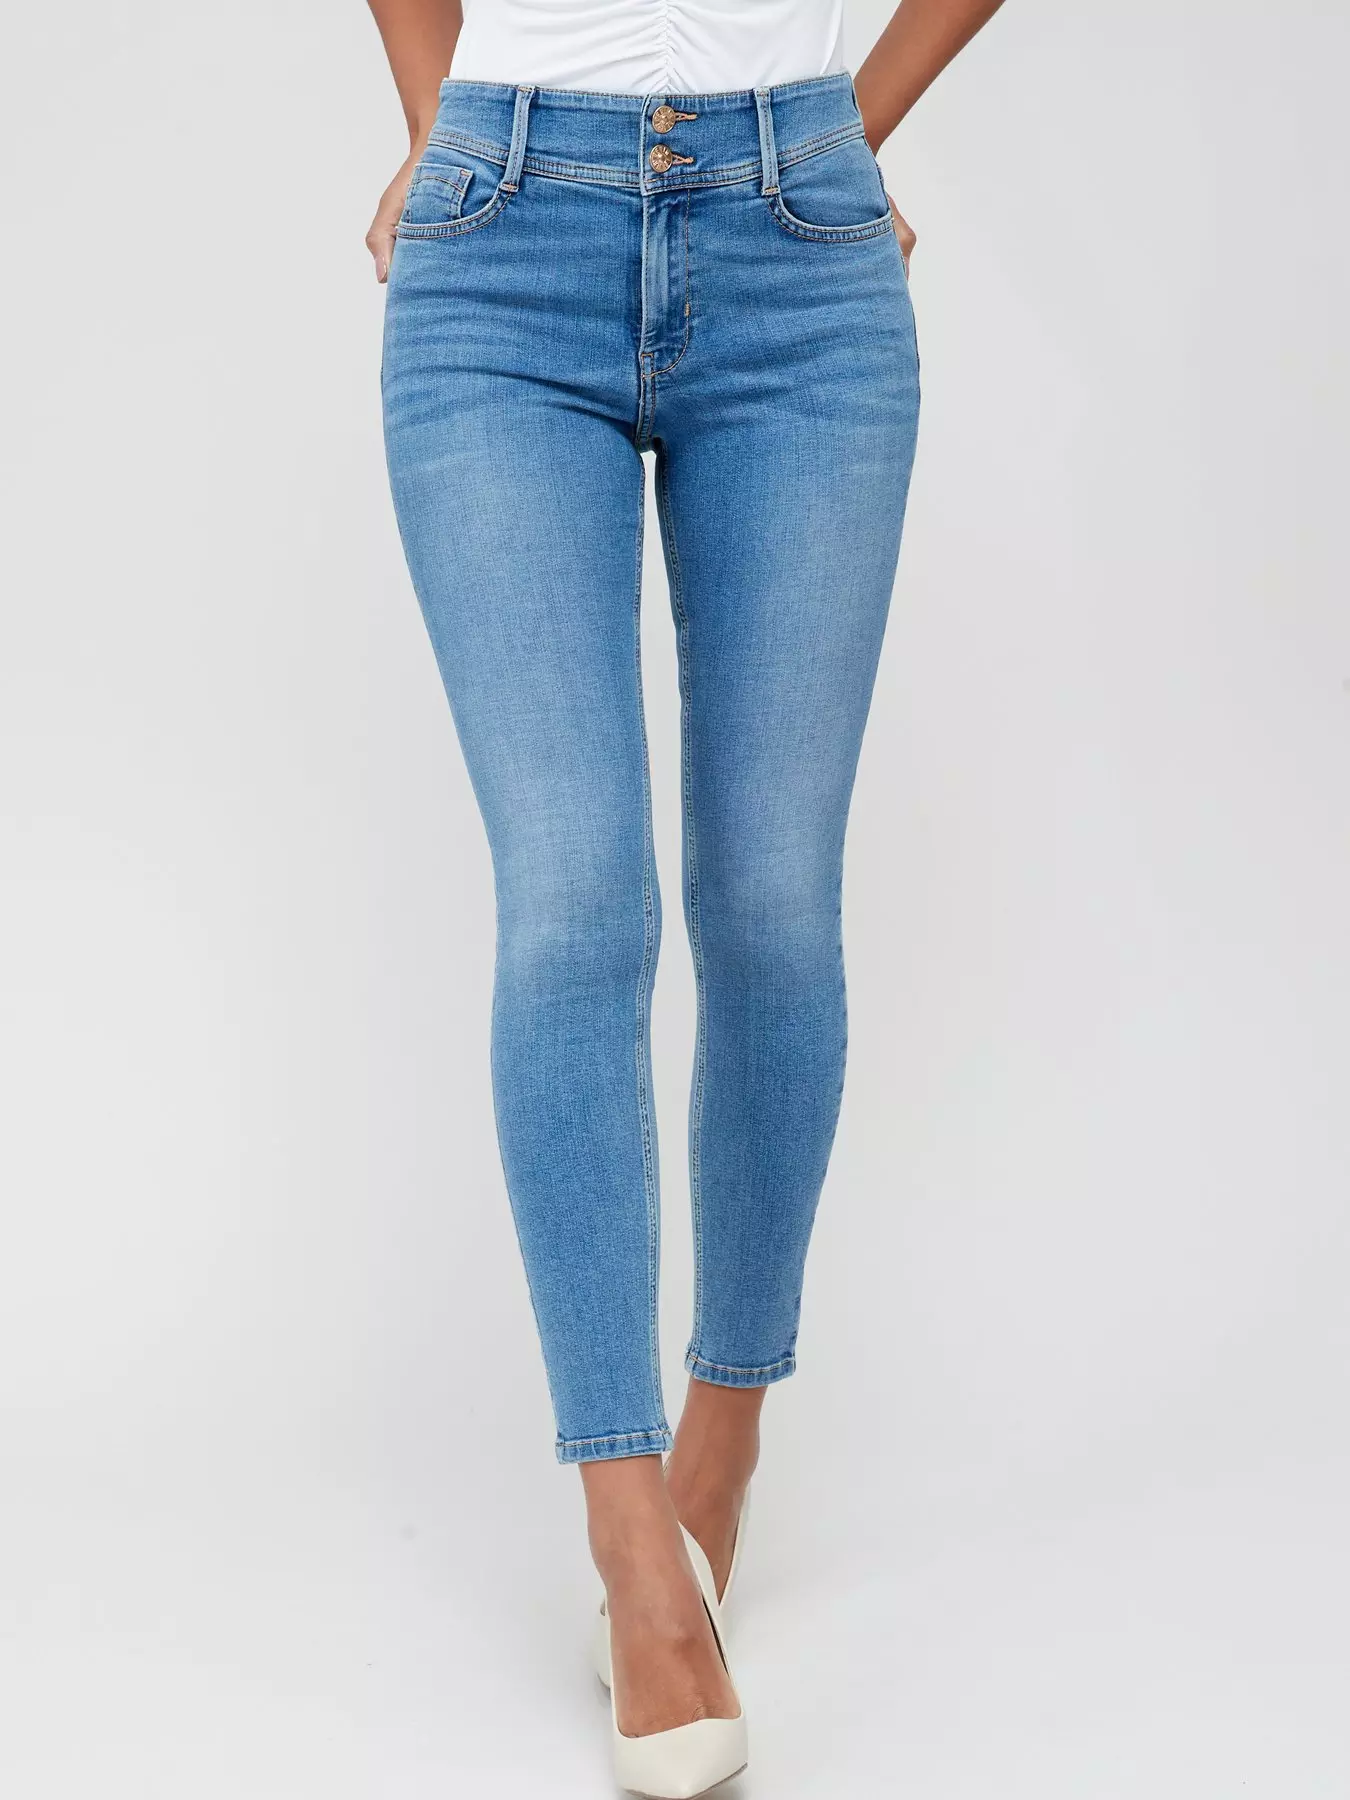 Sonoma Light Wash Mid Rise Skinny Jeans Size 4 Petite Blue - $15